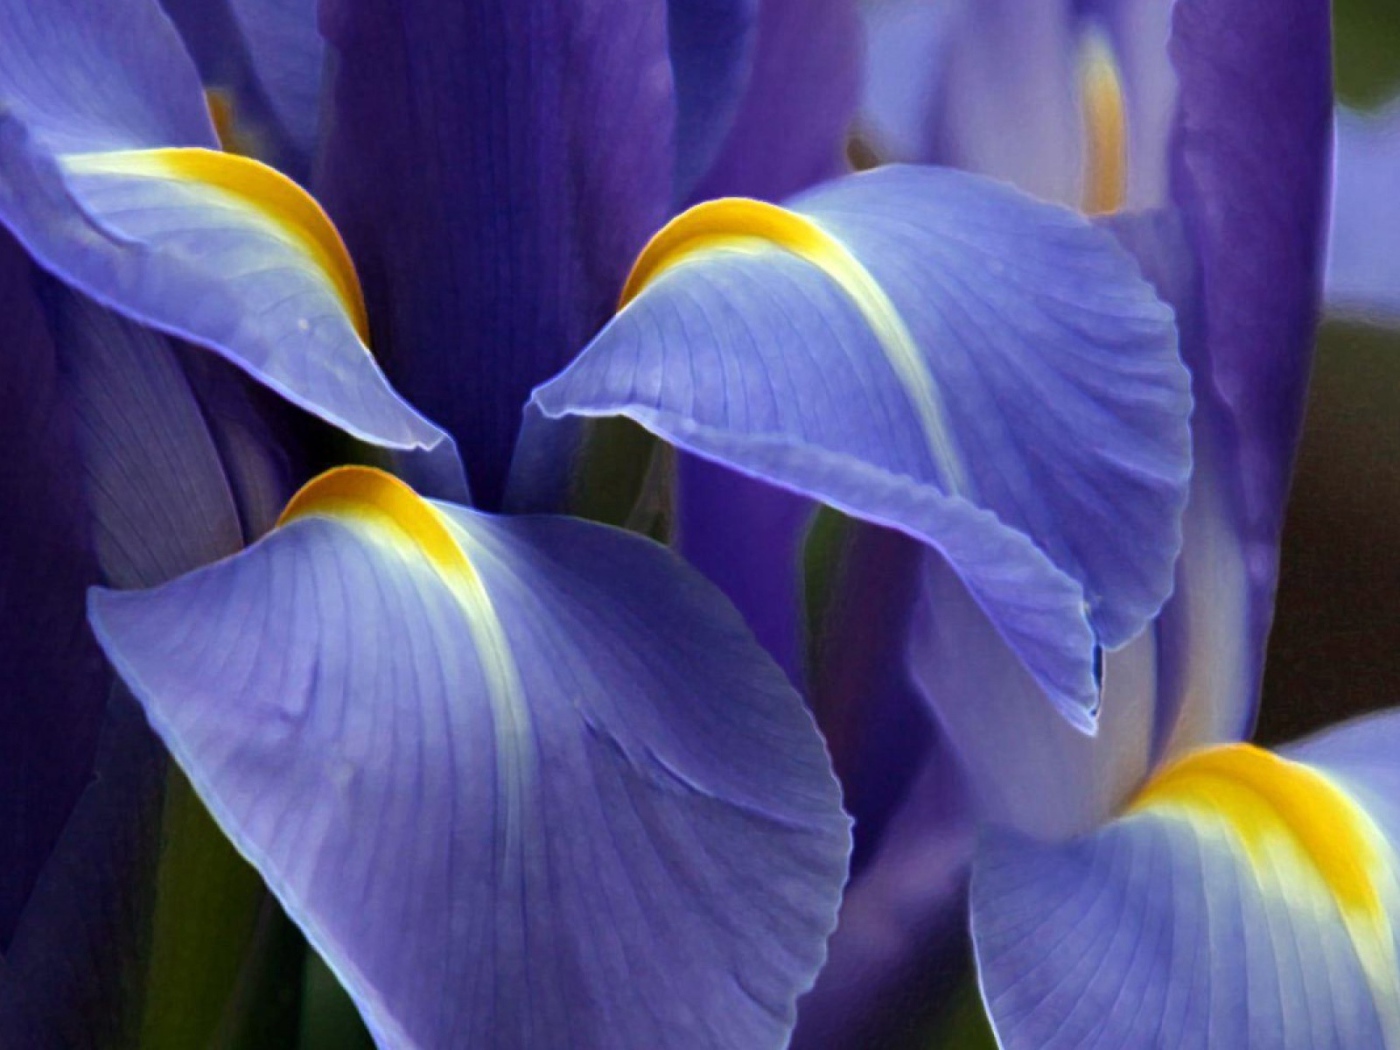 Iris flower close